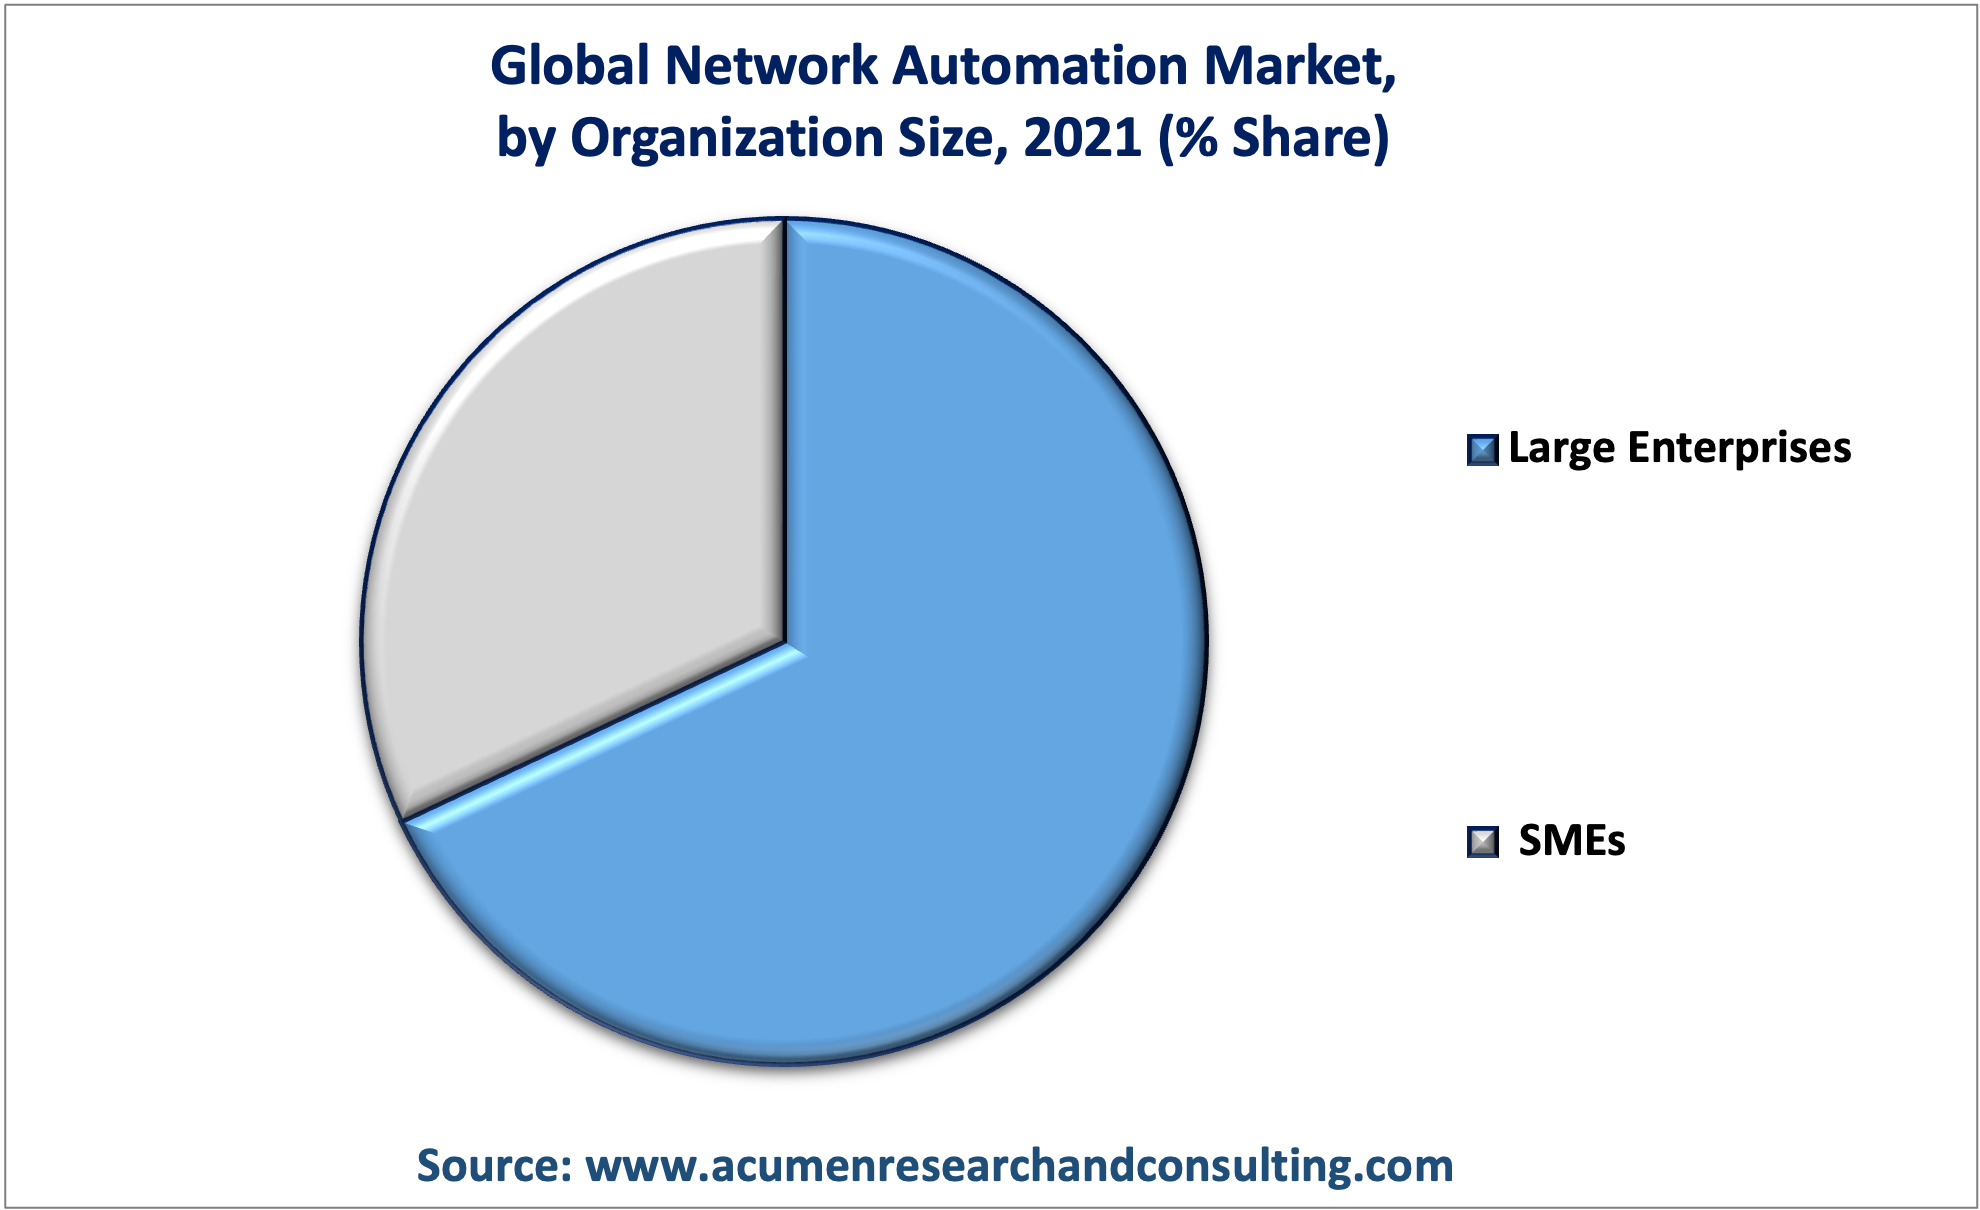 Network Automation Market